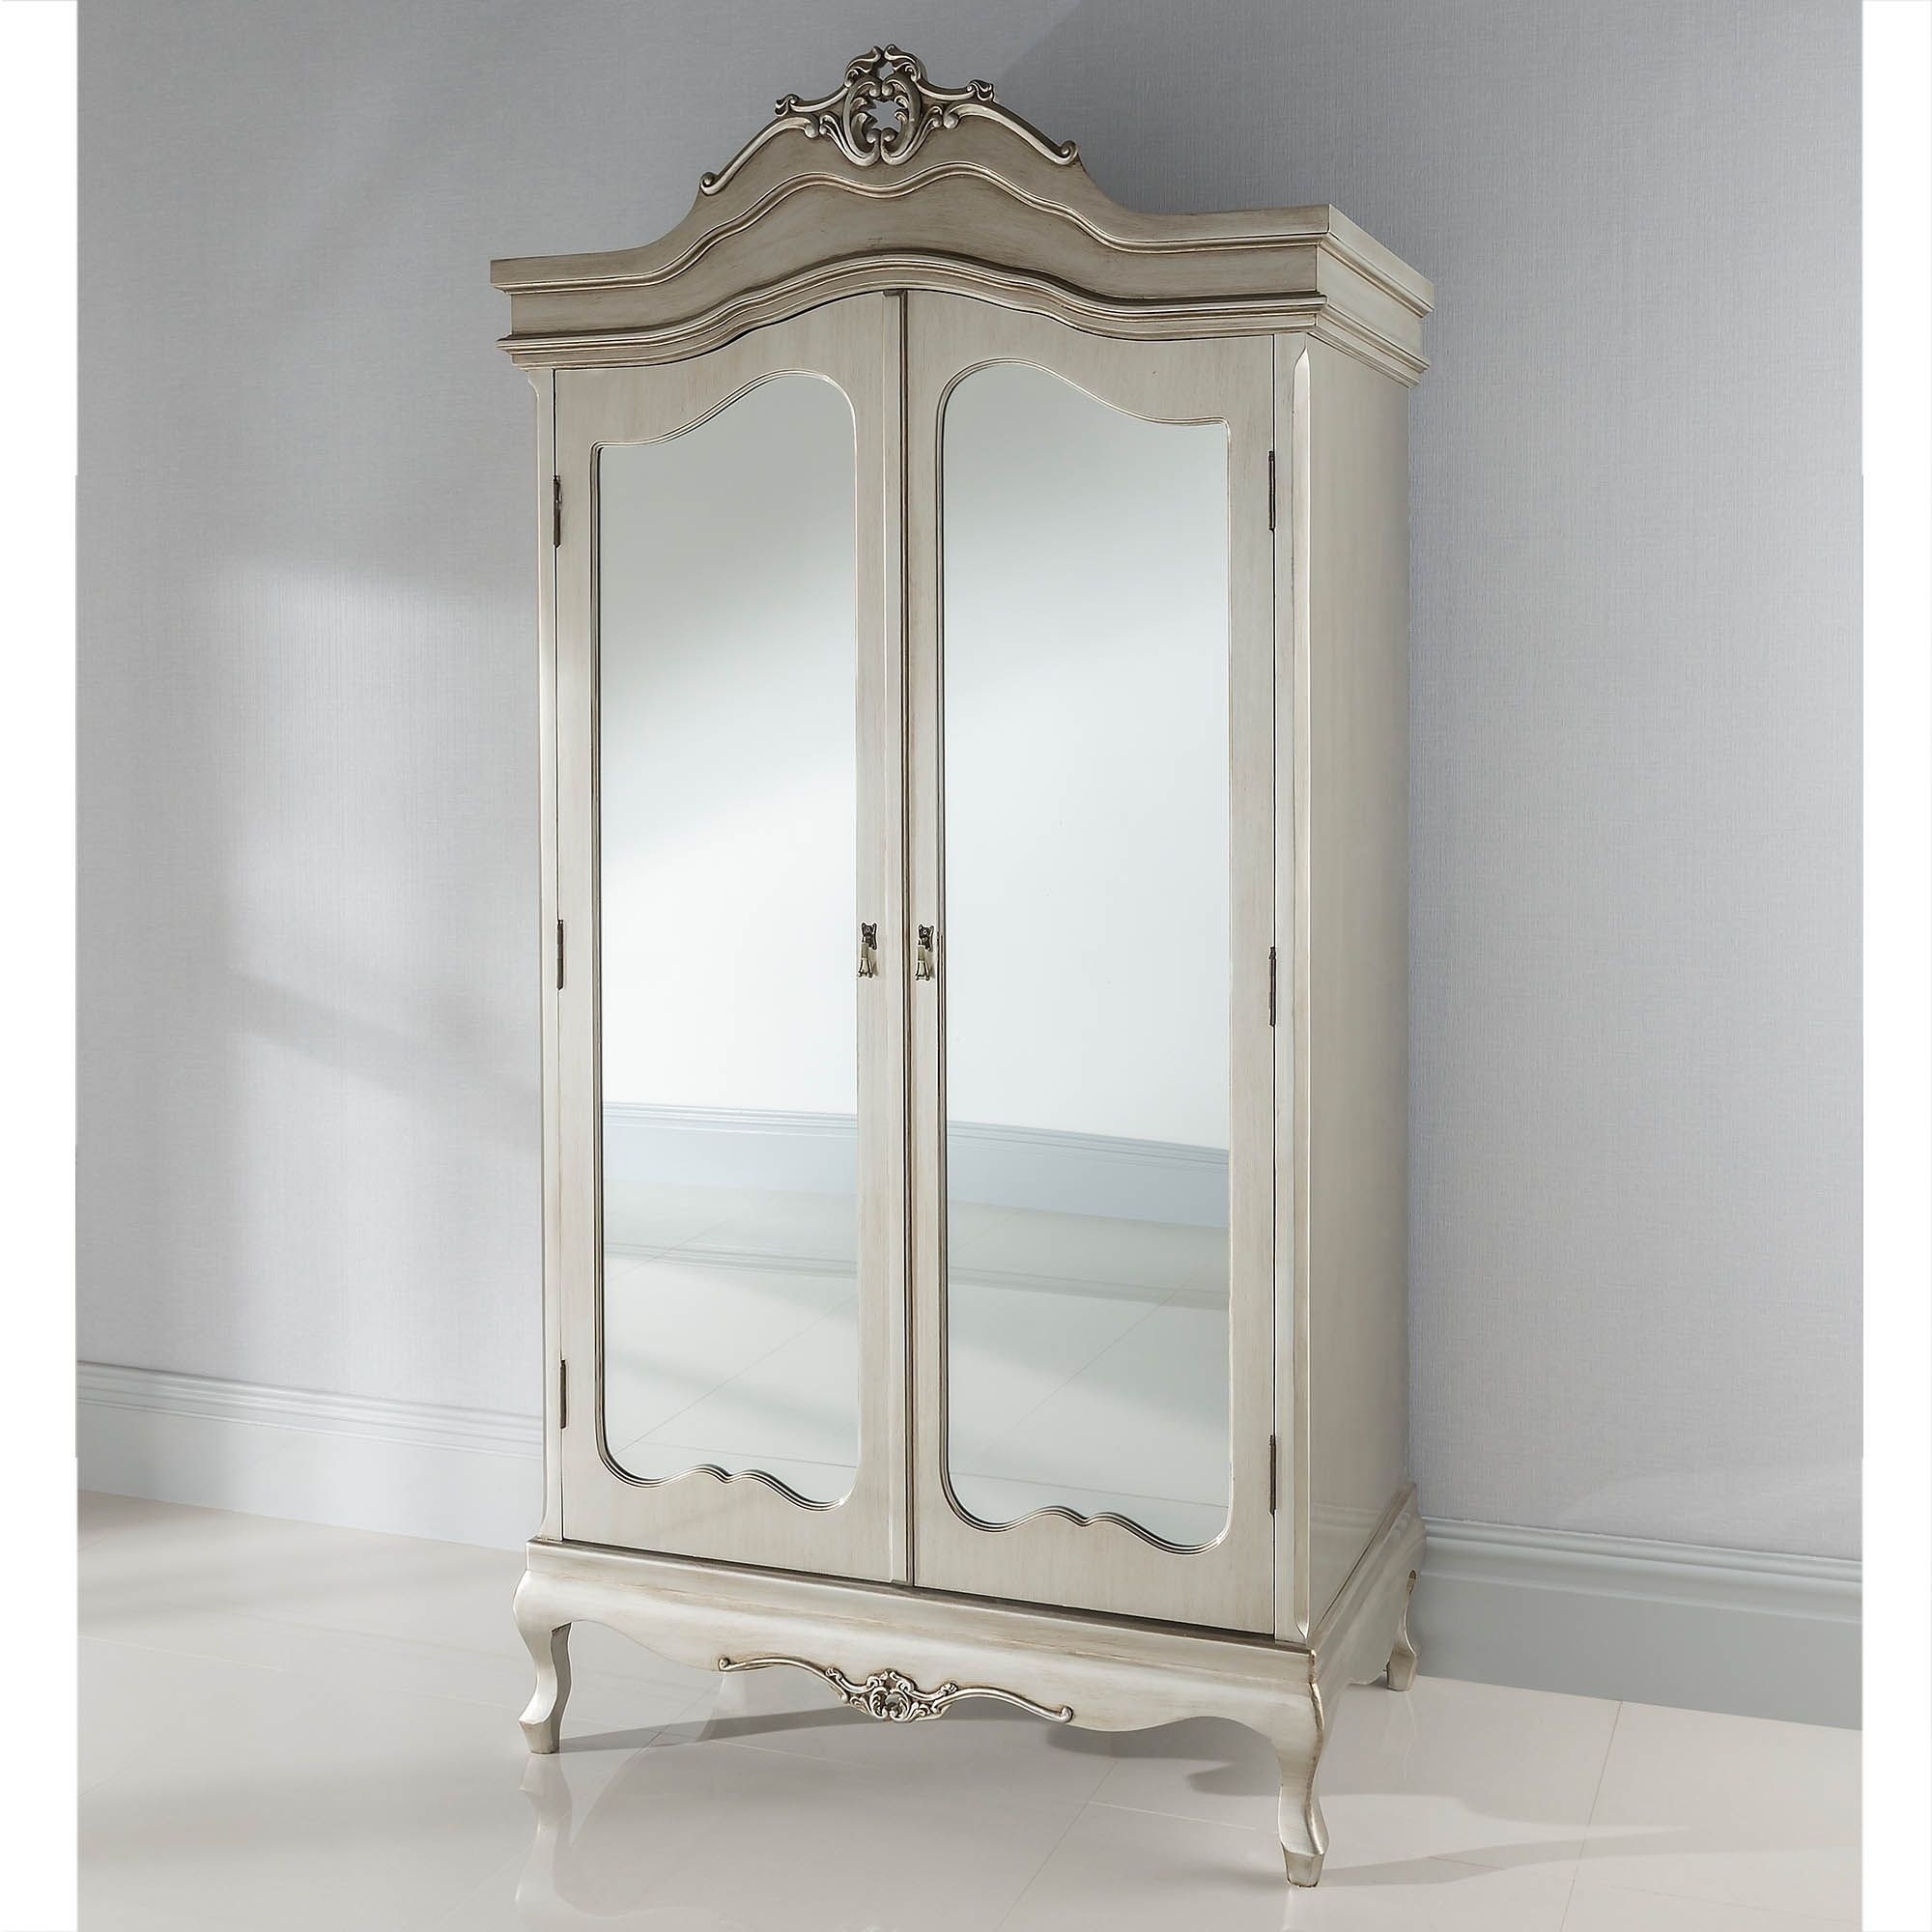 Argente Mirrored Wardrobe | Venetian Glass Furniture Regarding Venetian Glass Wardrobes (View 12 of 15)